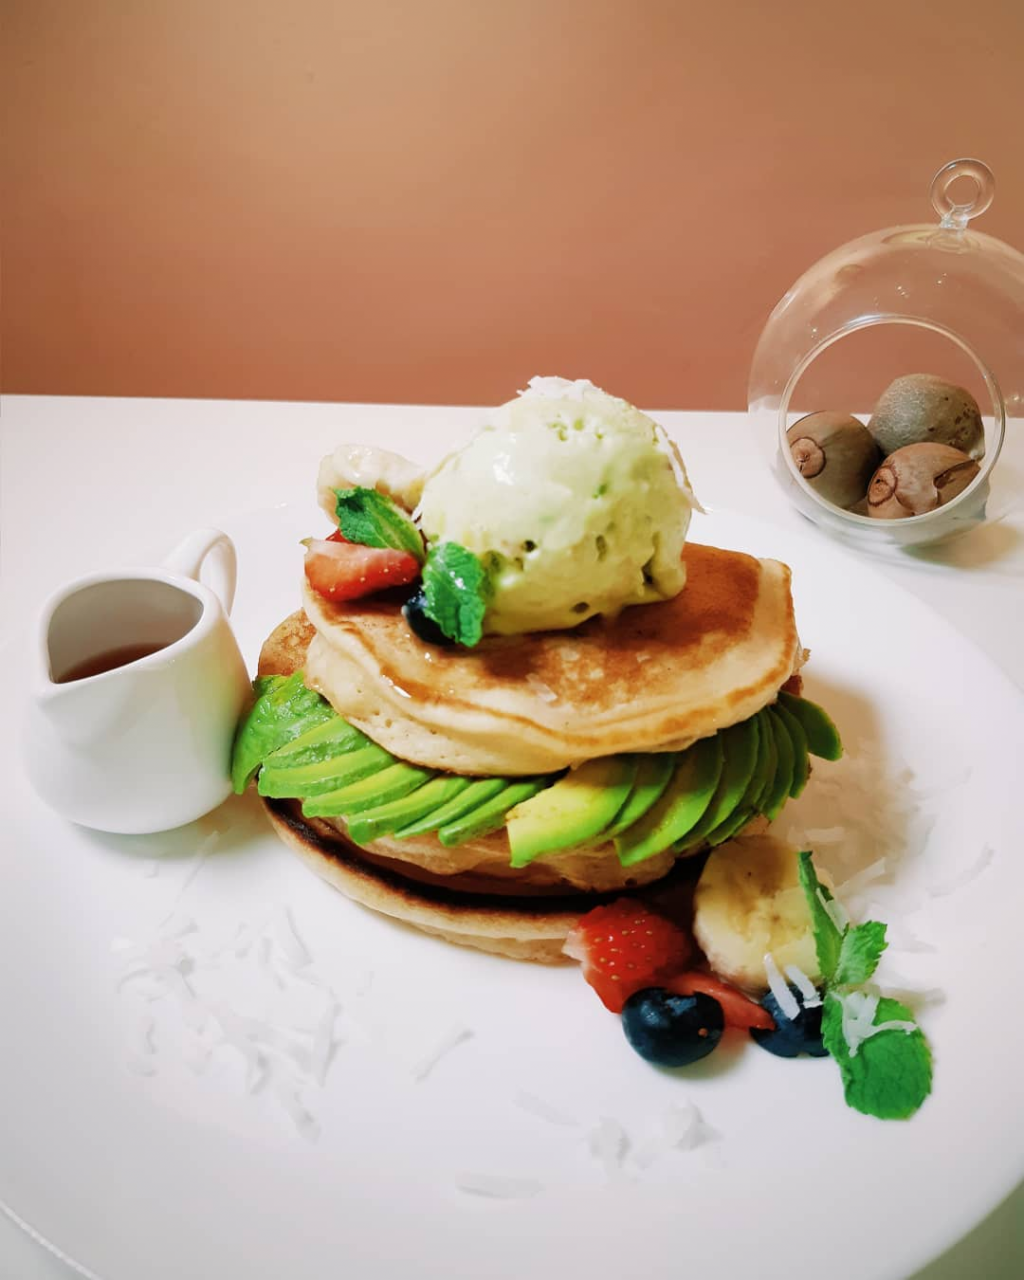 Avocatier's avocado pancake with avocado ice cream